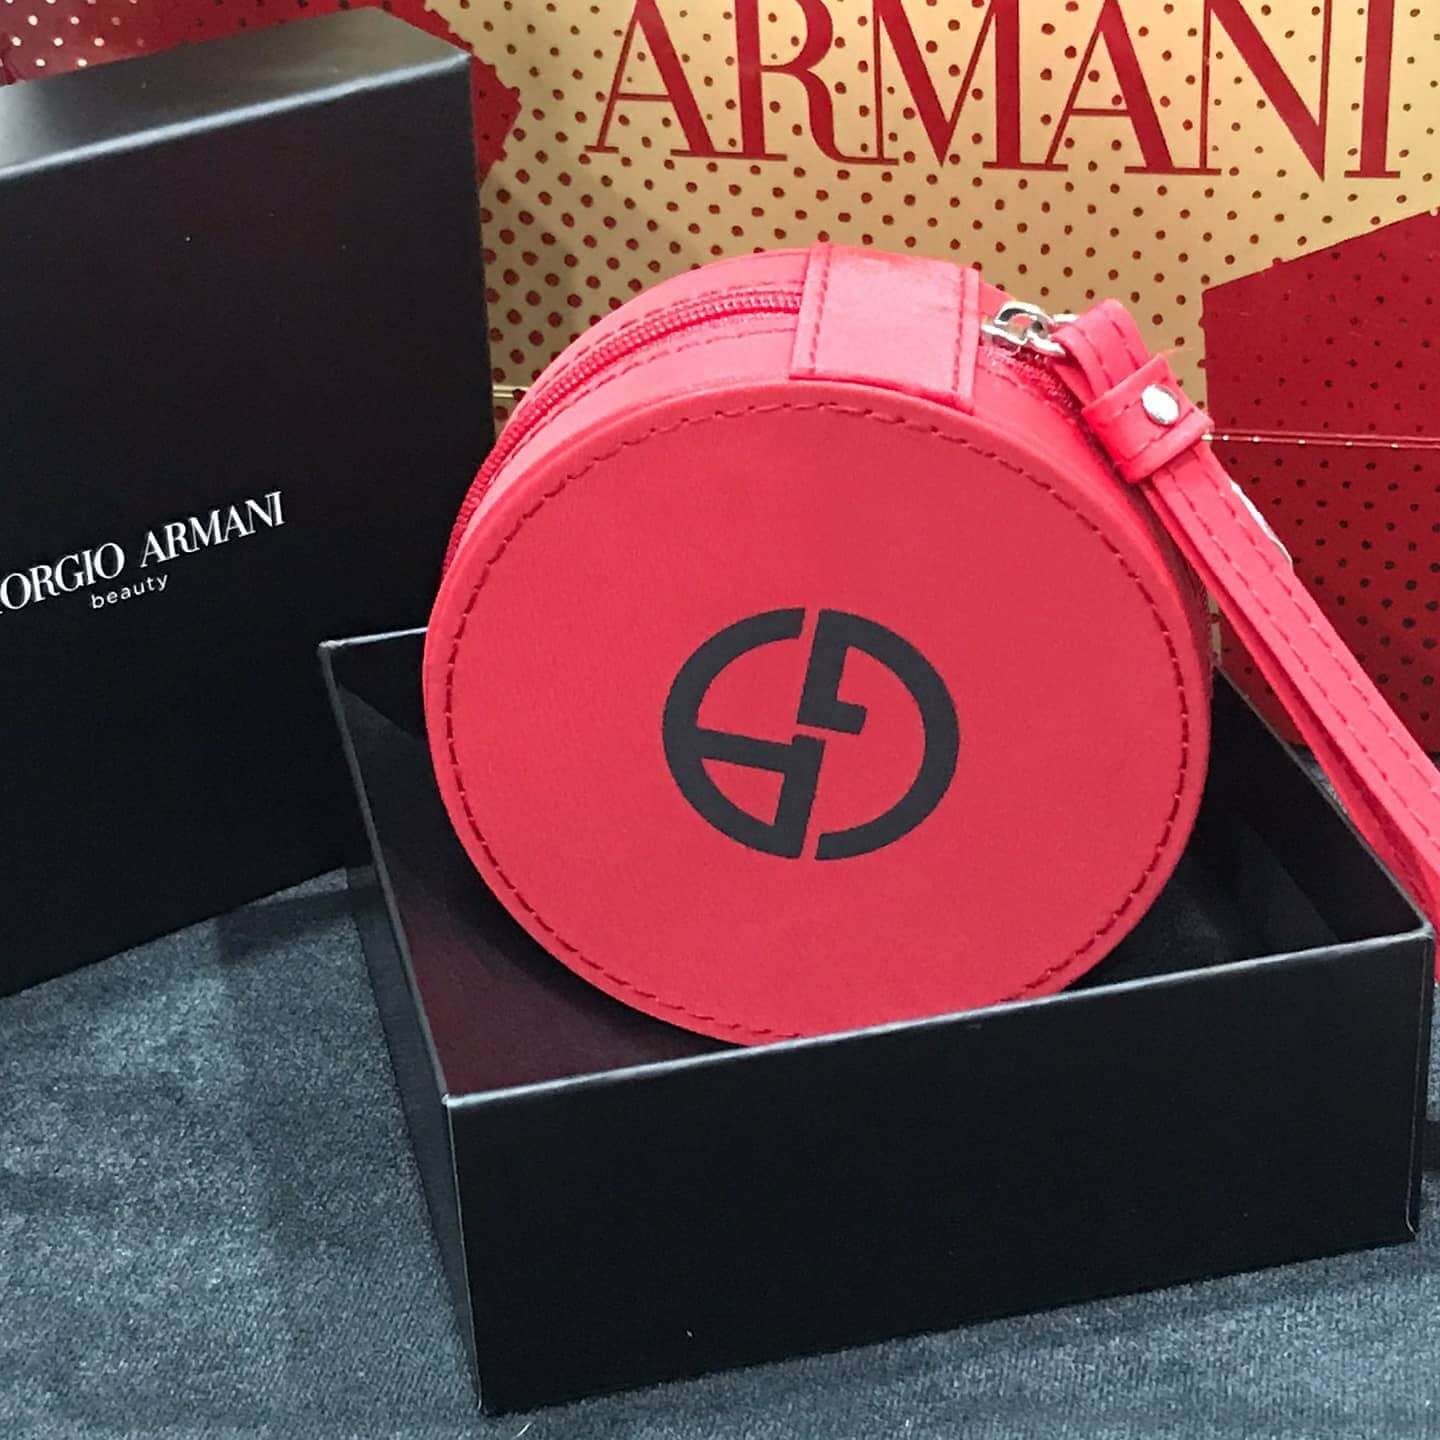 Giorgio Armani Beauty Red Cushion Vanity Bag  กระเป๋าสุดหรูจากแบรนด์ Giorgio Armani ทรงกลม รูปแบบตลับคูชชั่น ถือไปไหนก็เก๋ มาพร้อมกล่องแบรนด์สีดำ Giorgio Armani